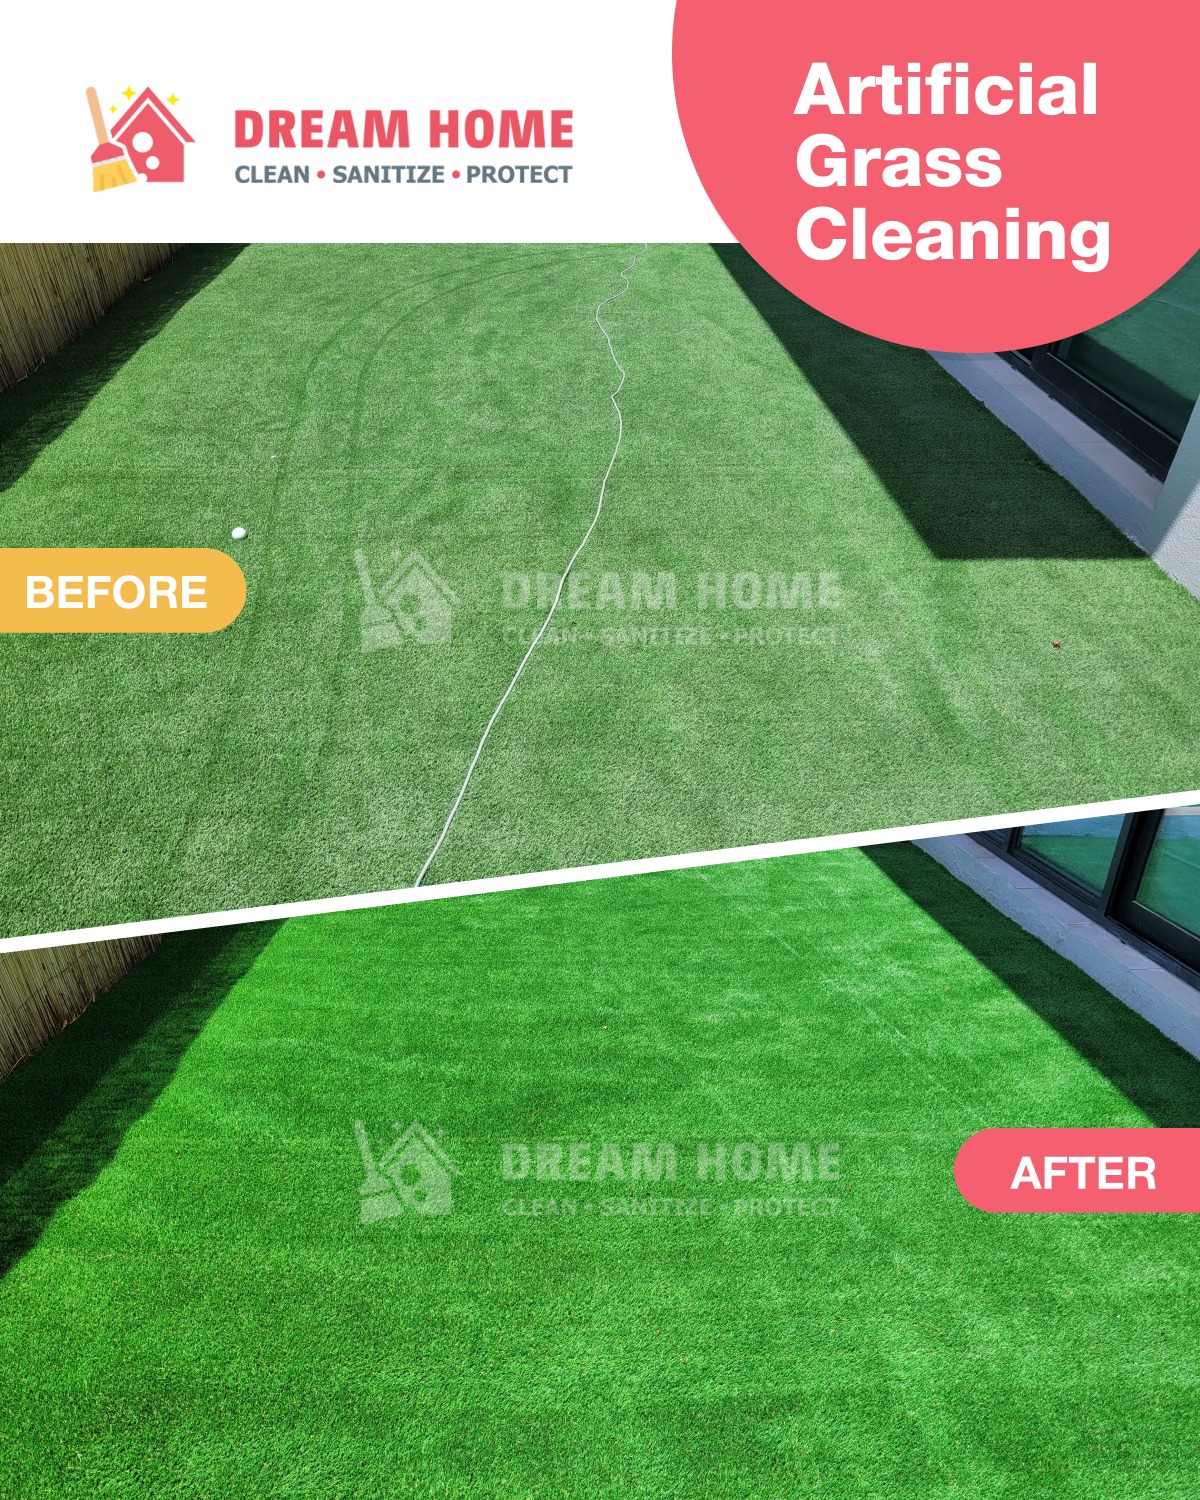 Artificial Grass cleaning Dubai